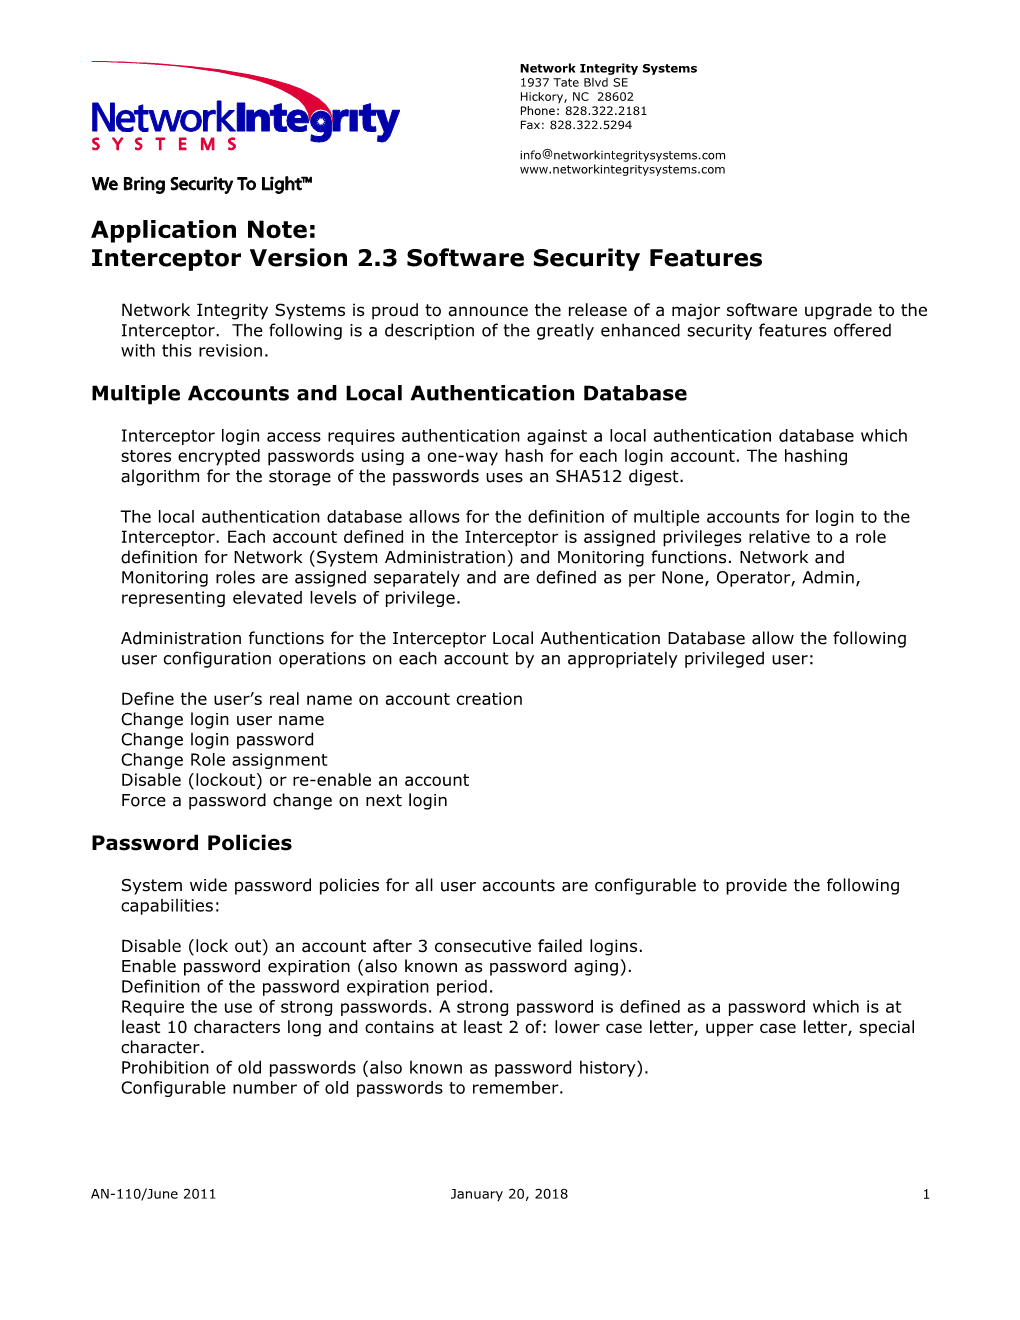 Interceptor Version 2.3 Software Security Features